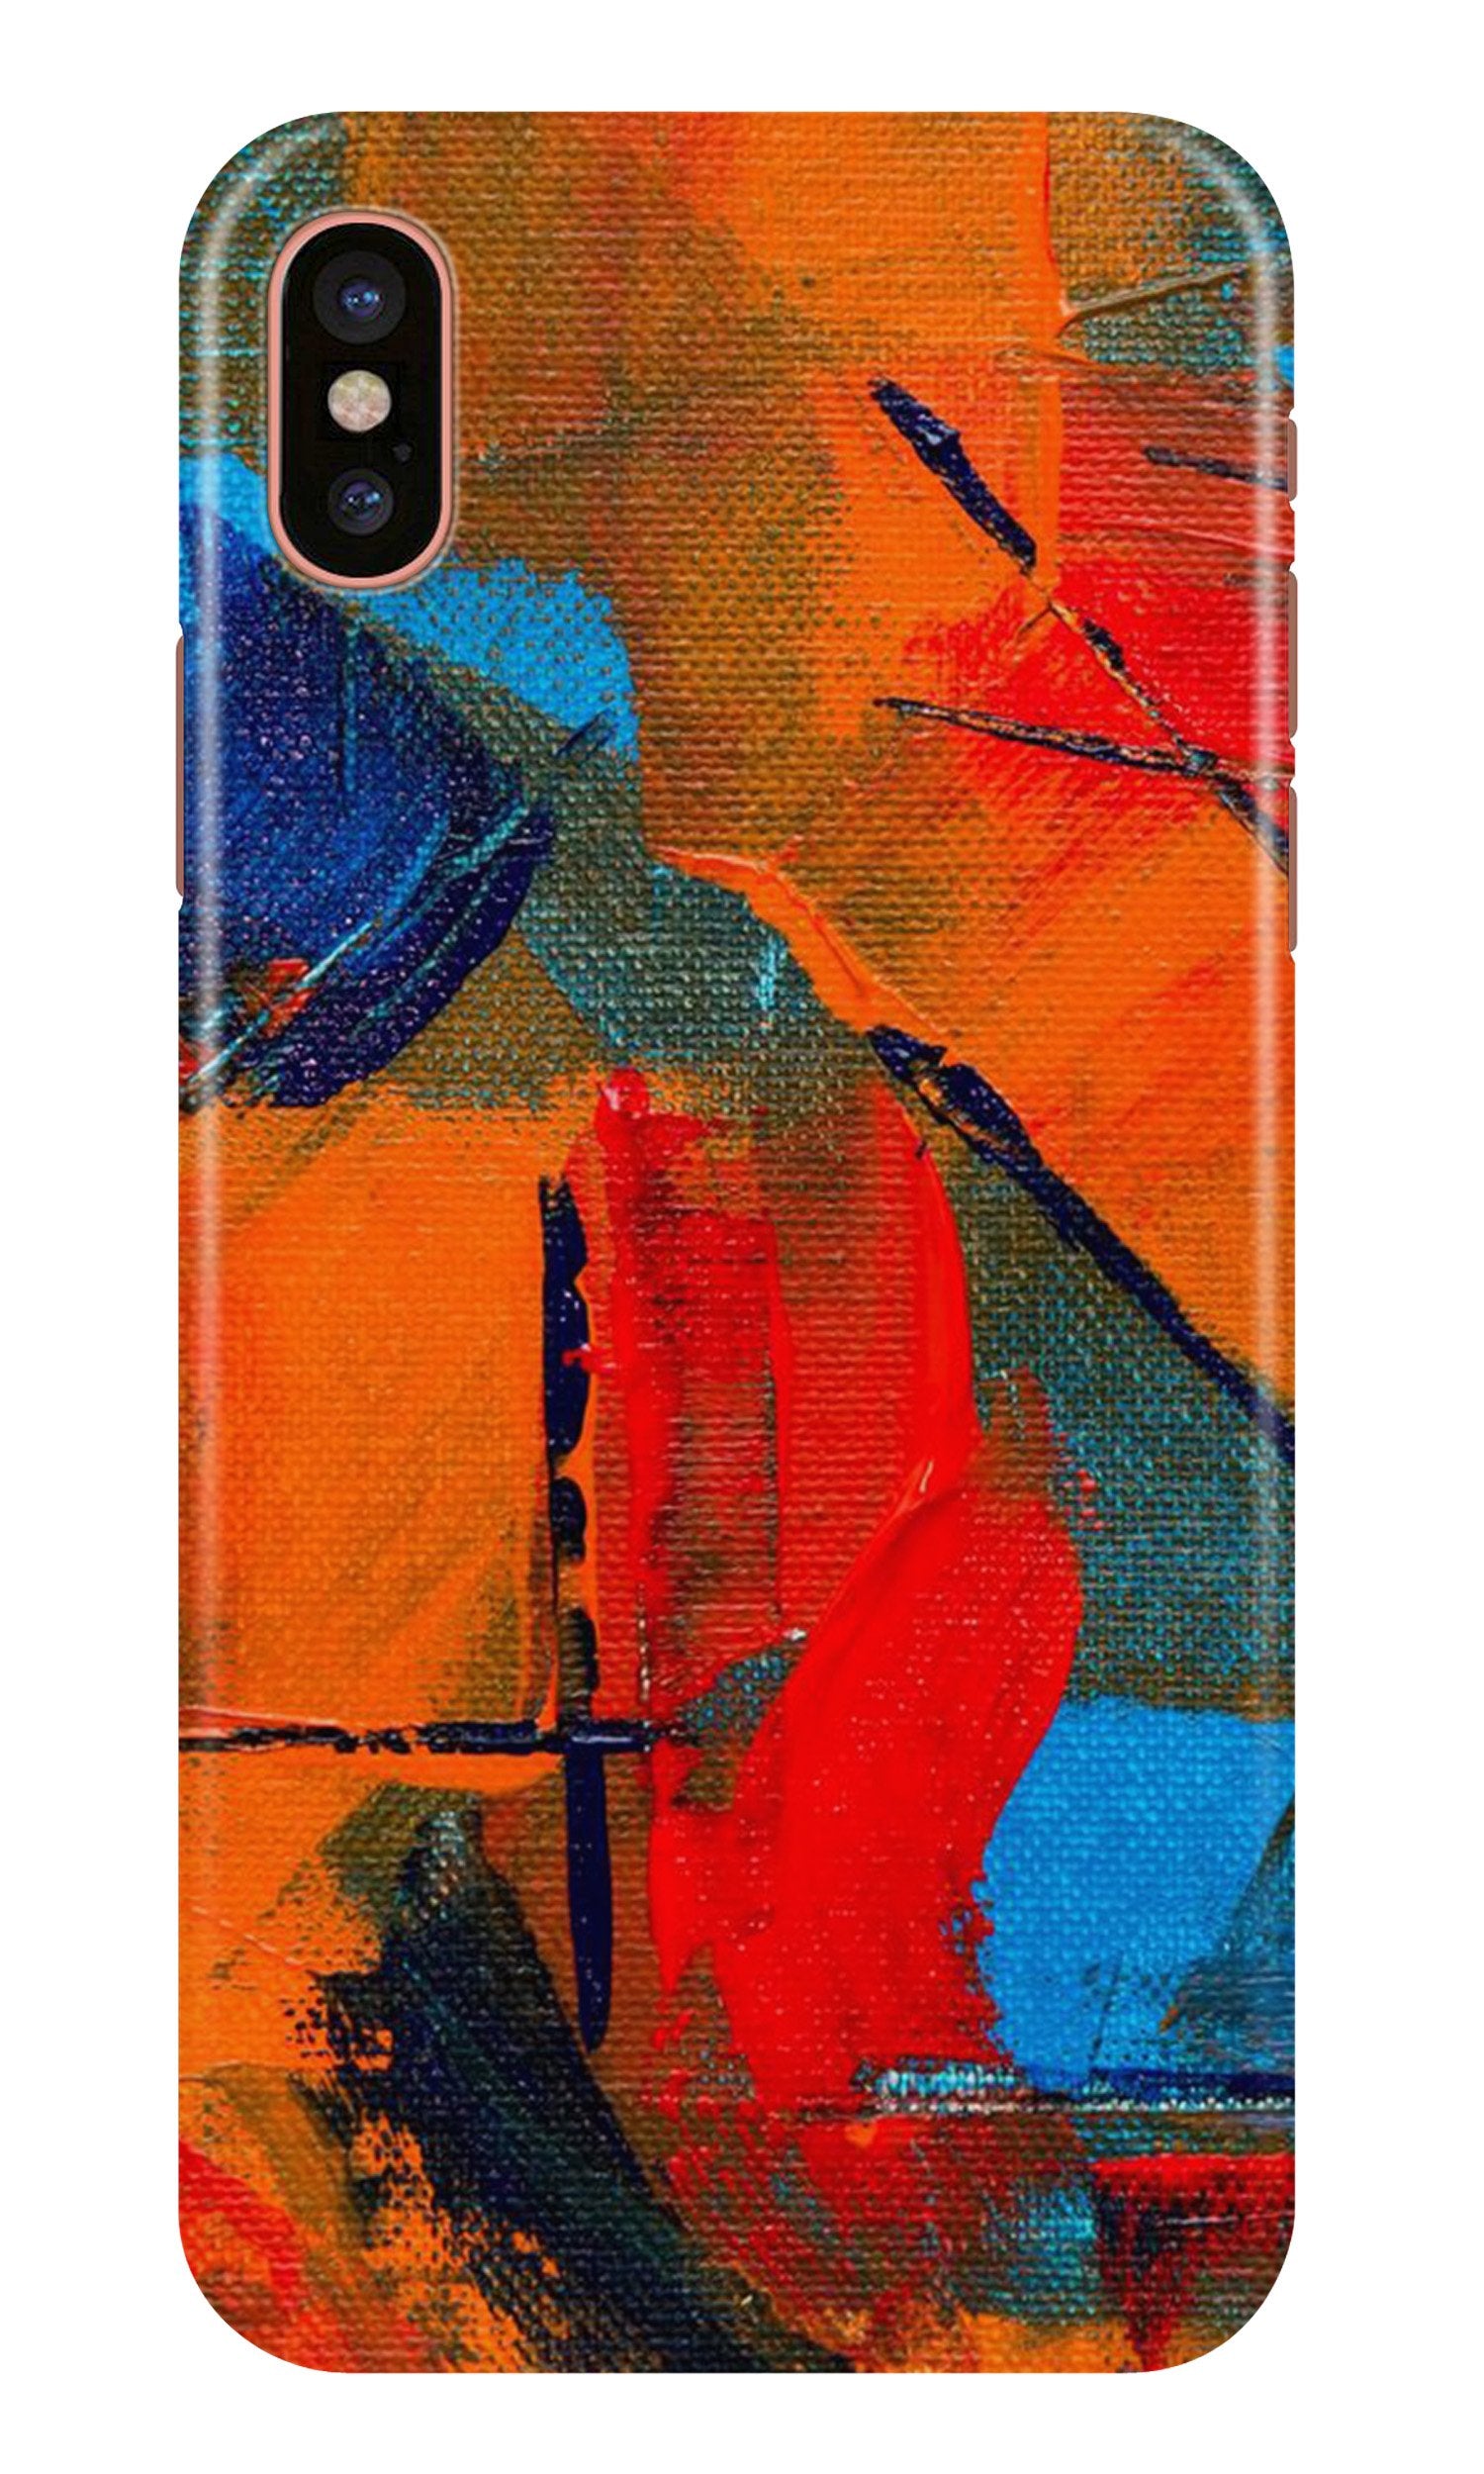 Modern Art Case for iPhone X (Design No. 237)